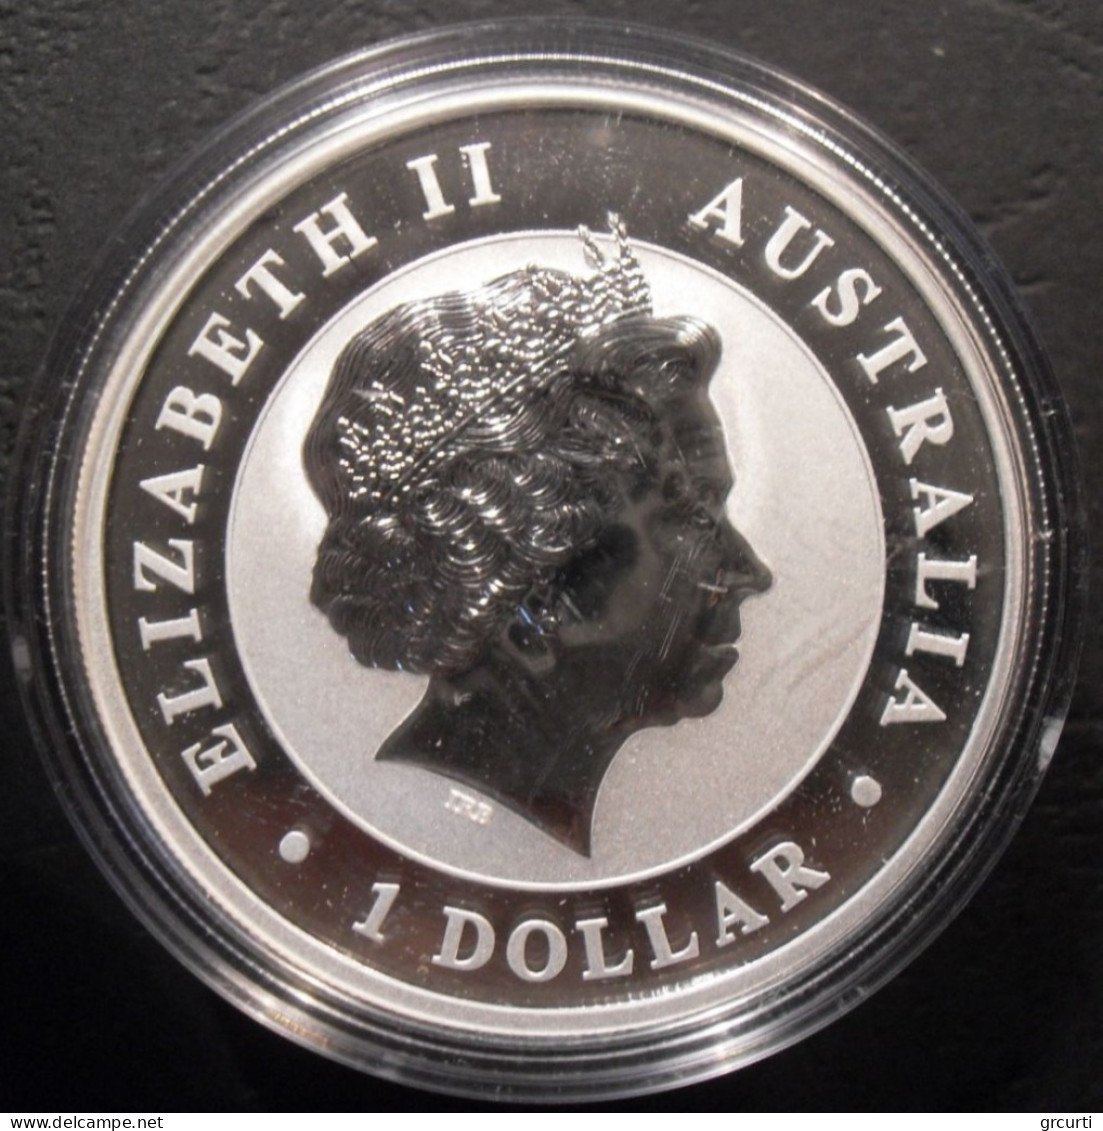 Australia - 1 Dollar 2013 - Koala - KM# 1979 - Silver Bullions